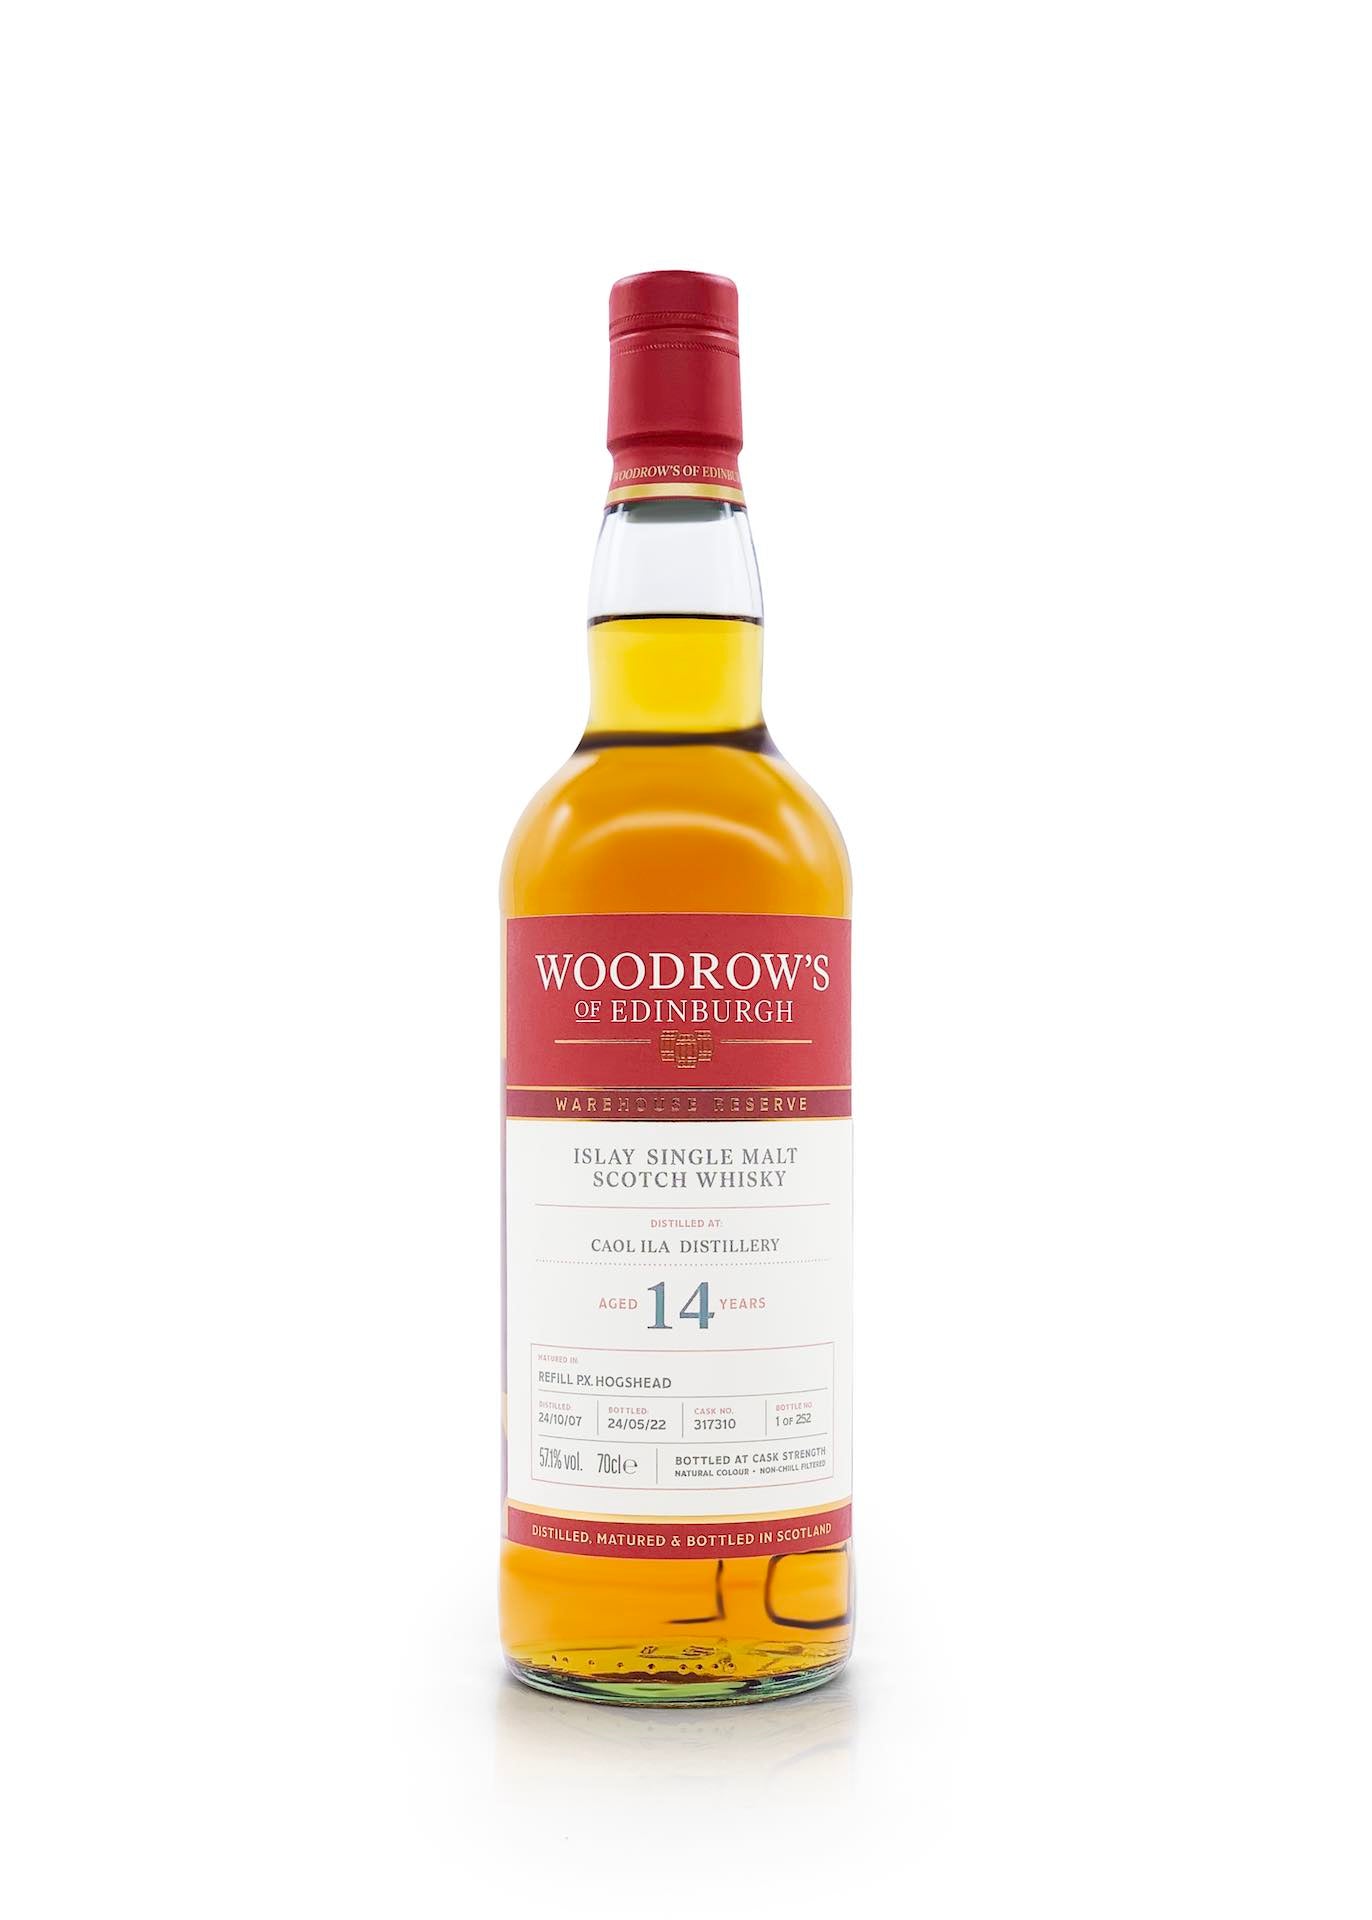 Woodrow's of Ediburgh Caol Ila 14 Year Old Whisky